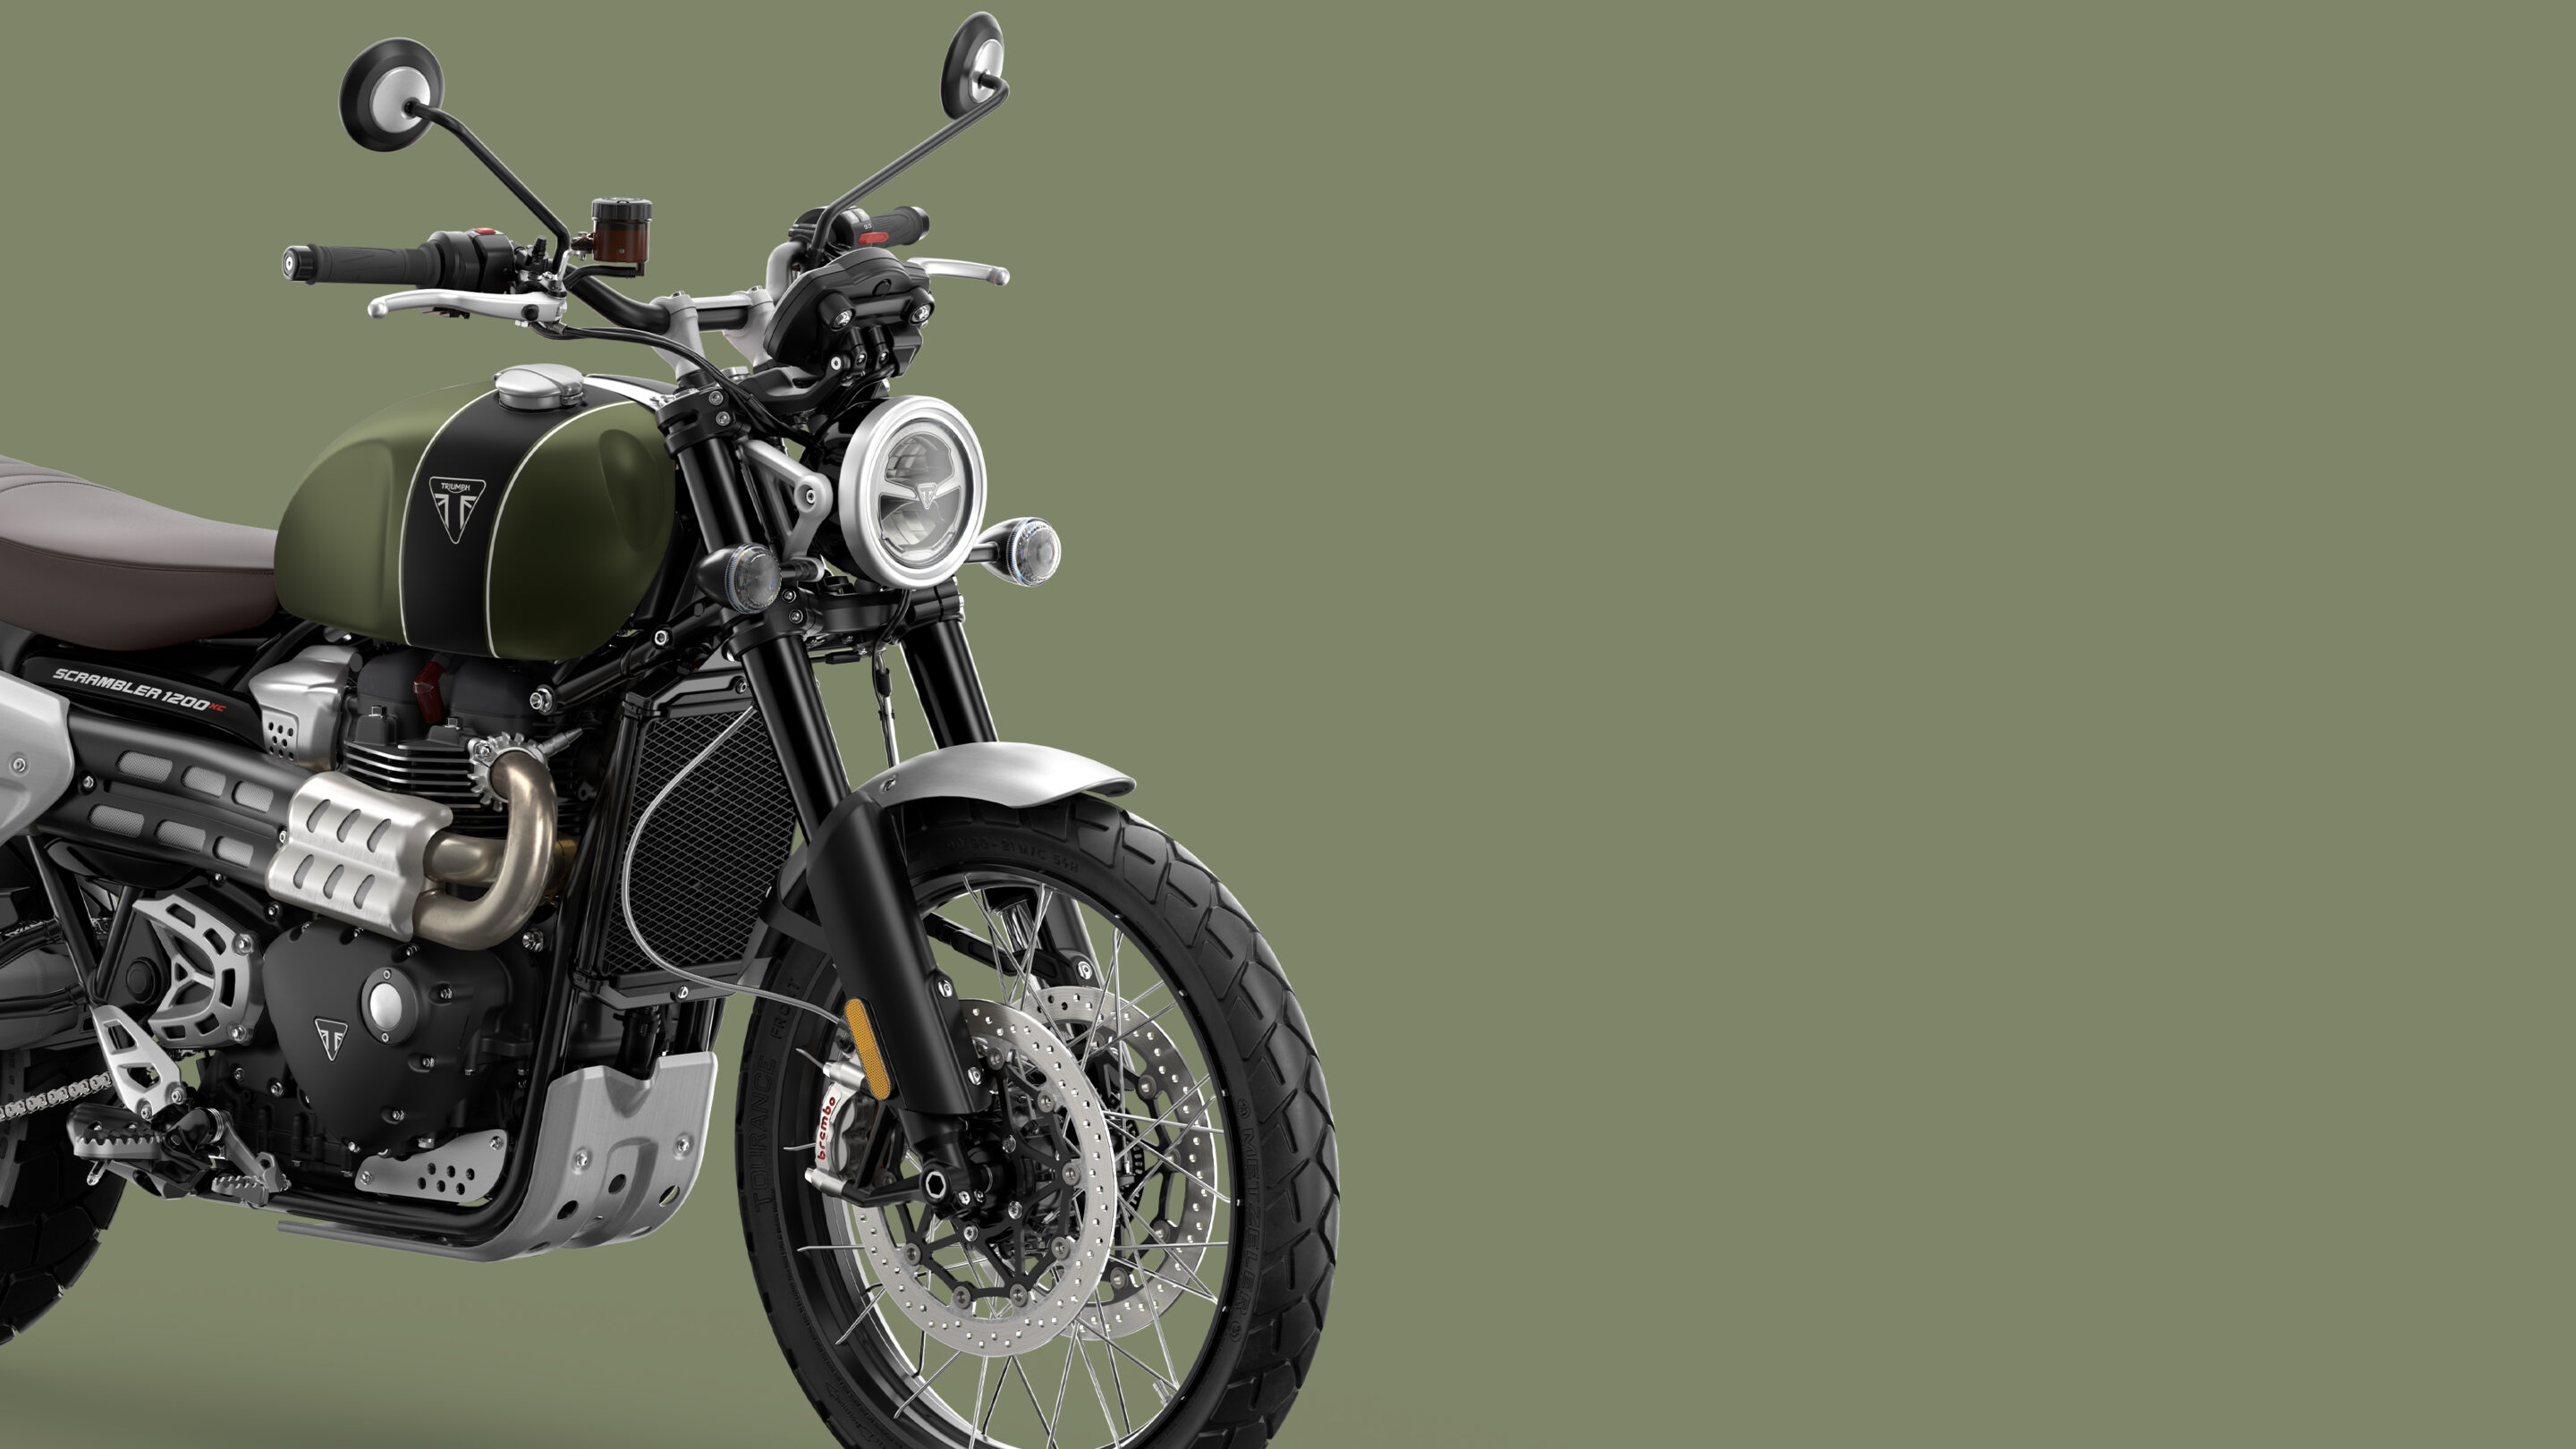 Triumph Motorcycles CGI Assets